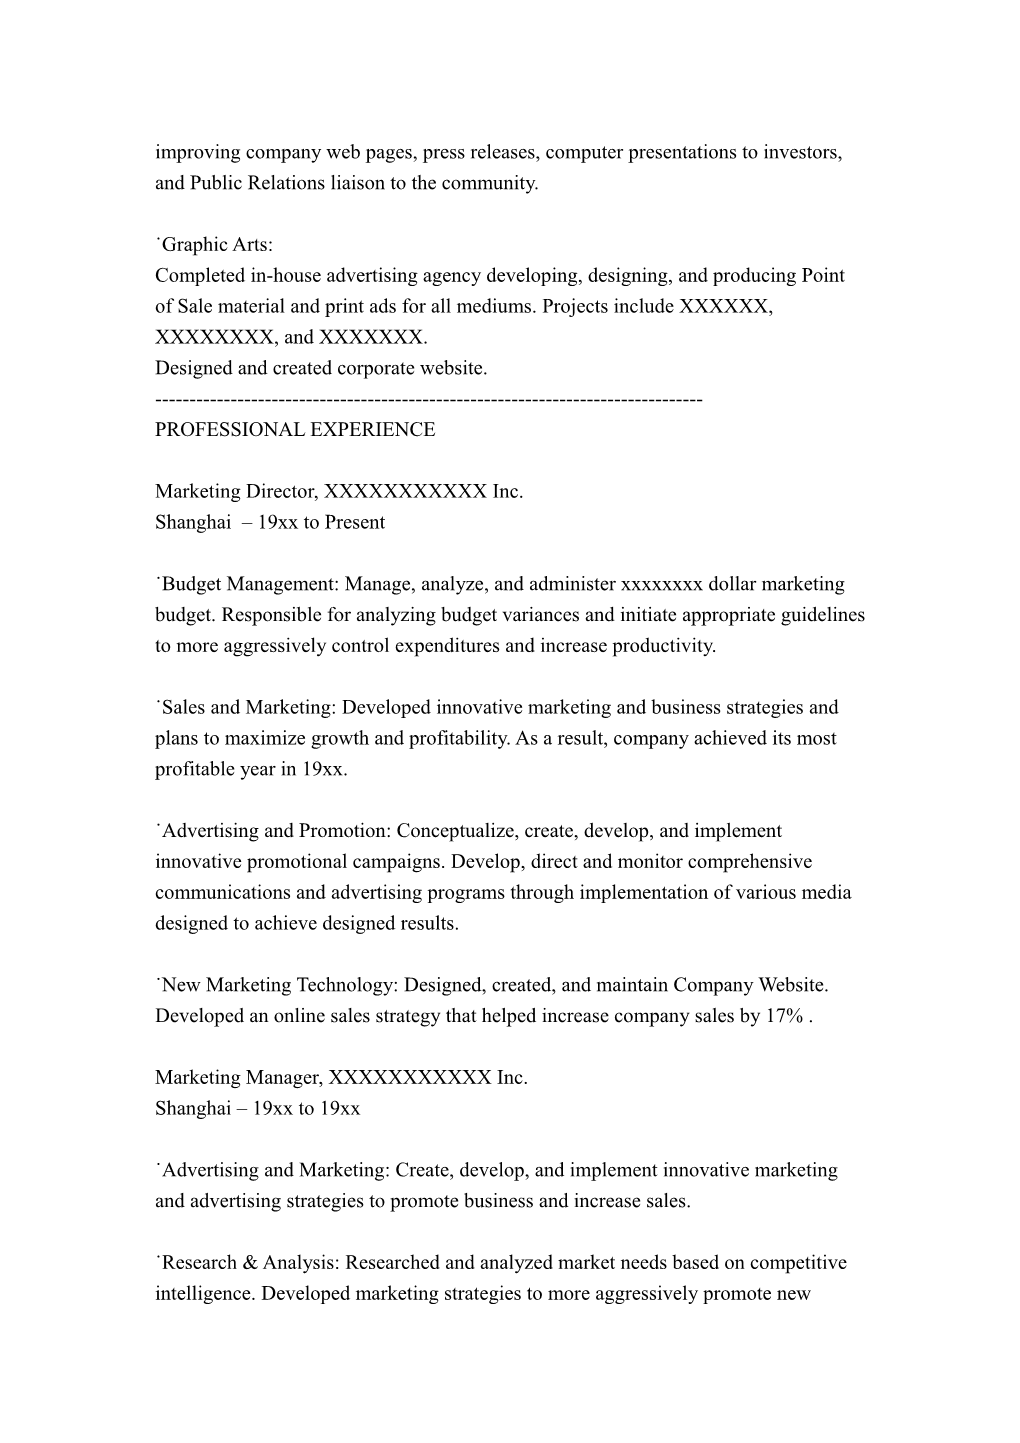 Sample Combination Resume (Marketing)